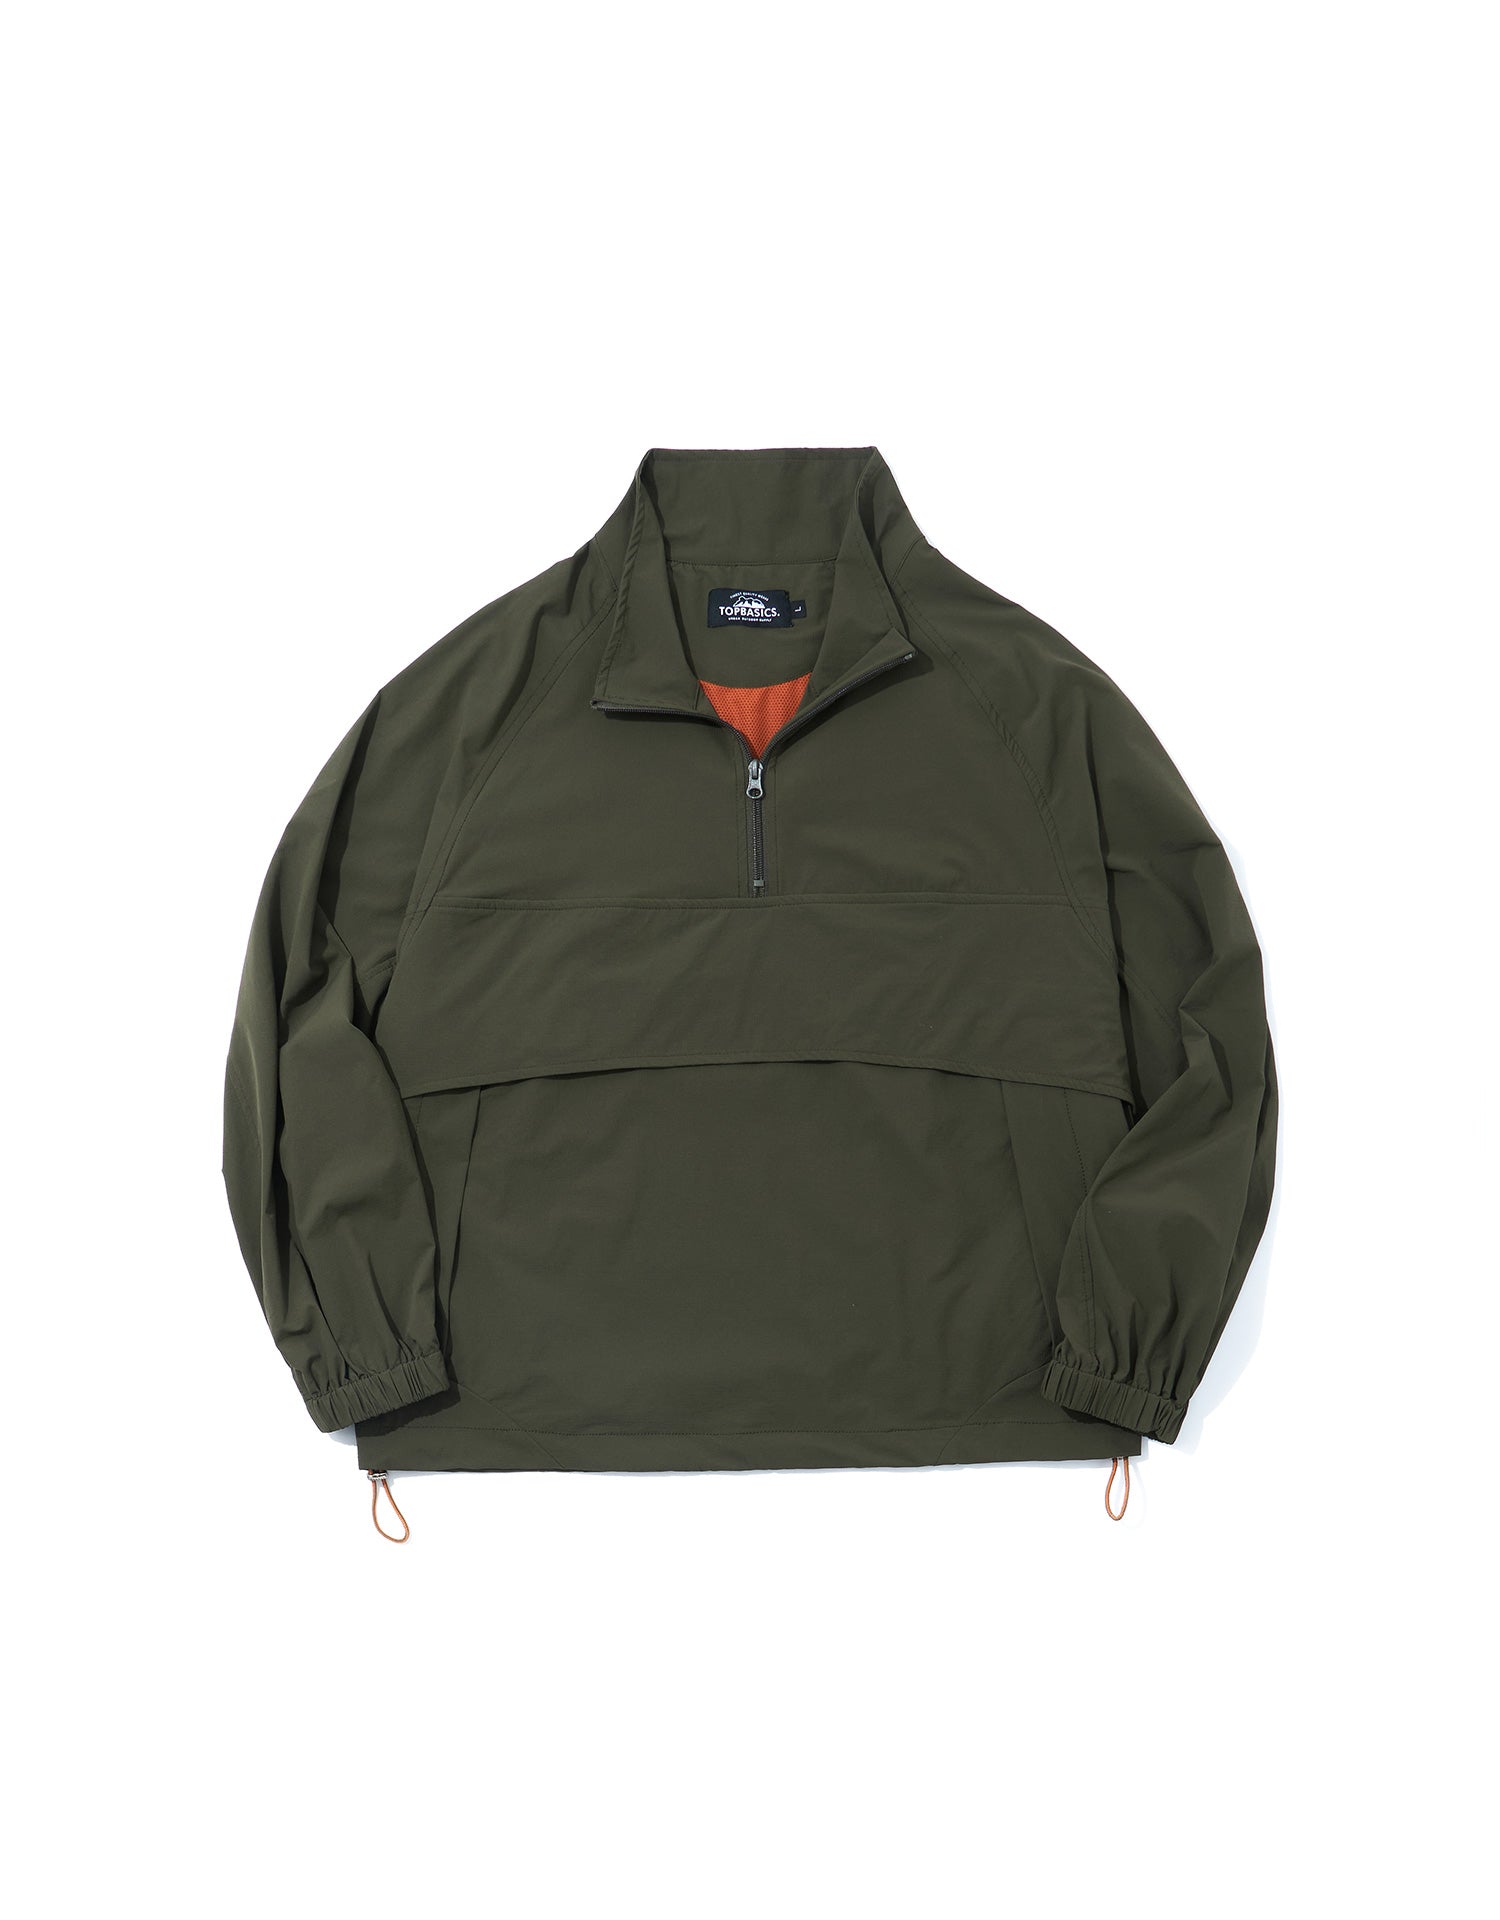 TopBasics Two Pockets Basic Pullover Jacket